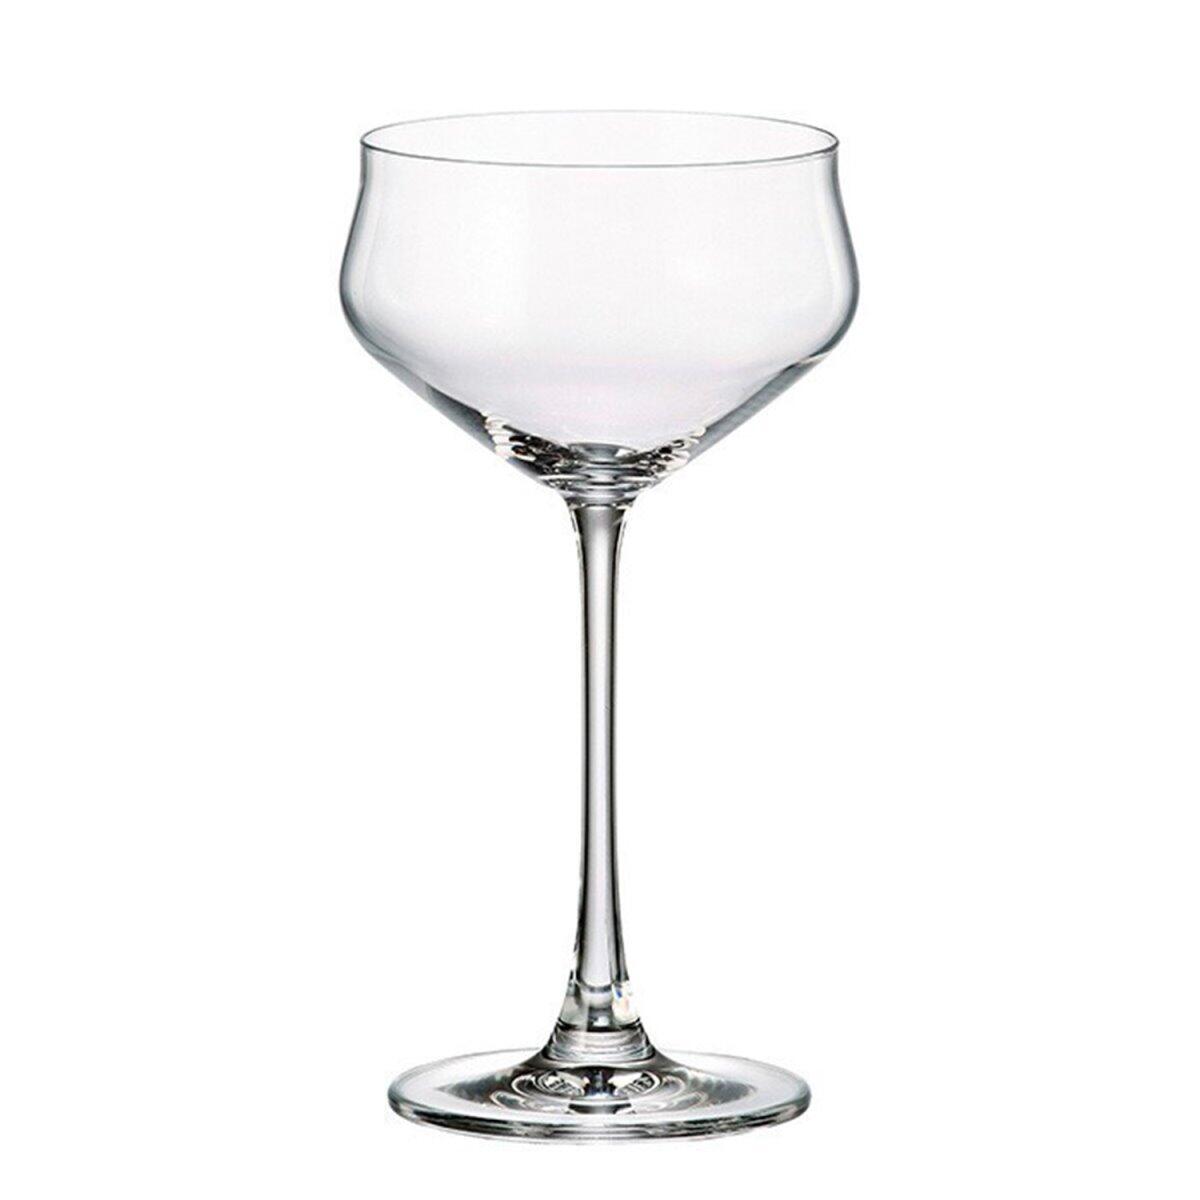 Magnolia Glass Cup